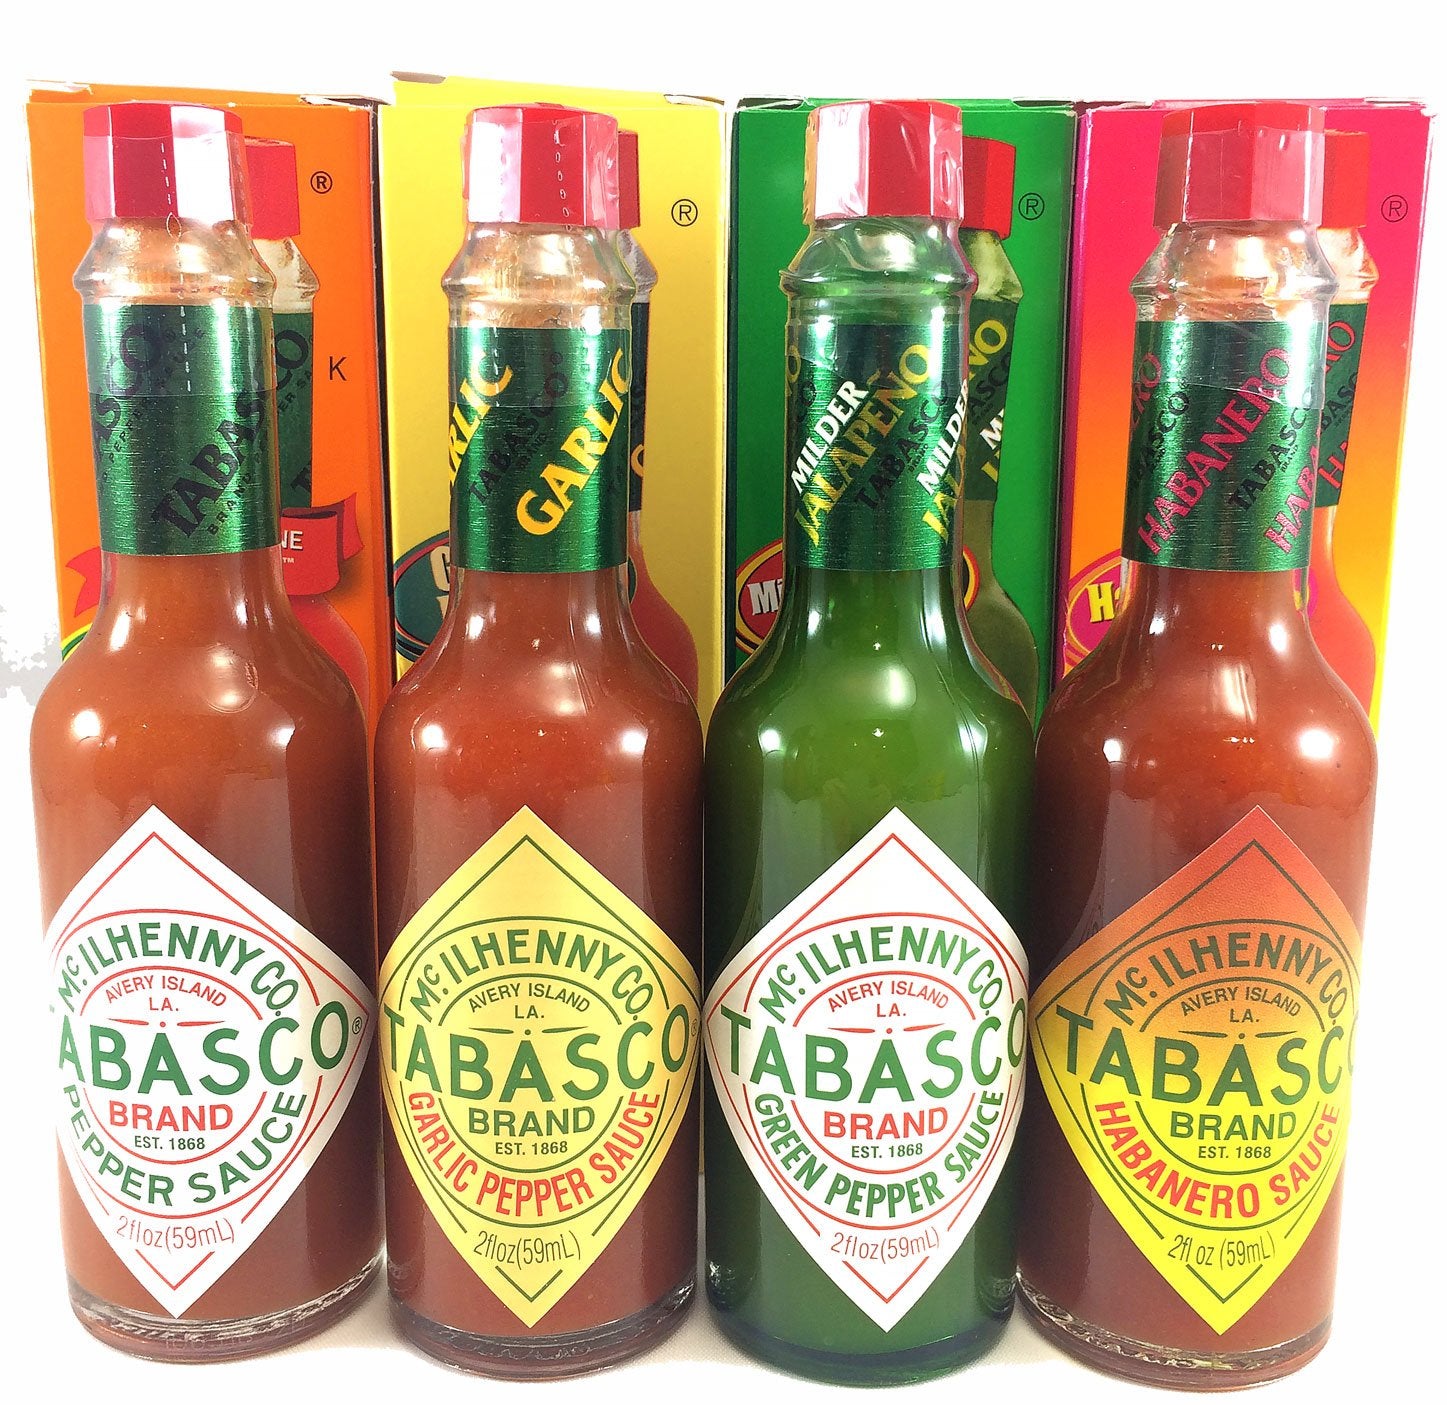 Tabasco Sauce Variety 4 Pack Original, Garlic, Green Pepper, Hababero